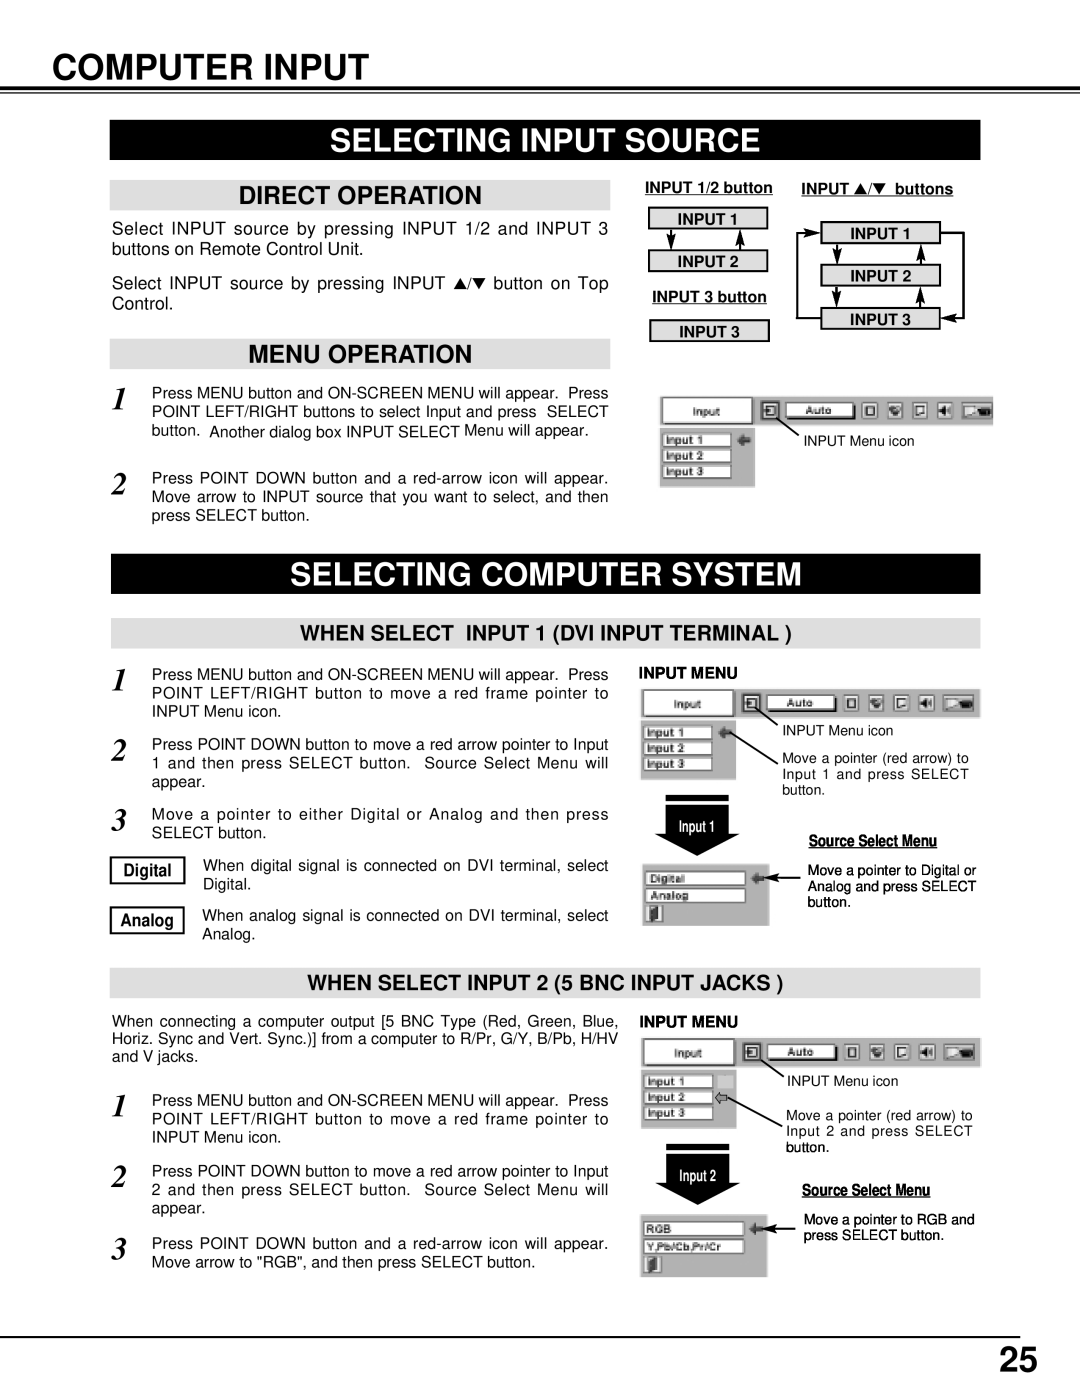 Christie Digital Systems 38-VIV301-01 Computer Input, Selecting Input Source, Selecting Computer System, Direct Operation 